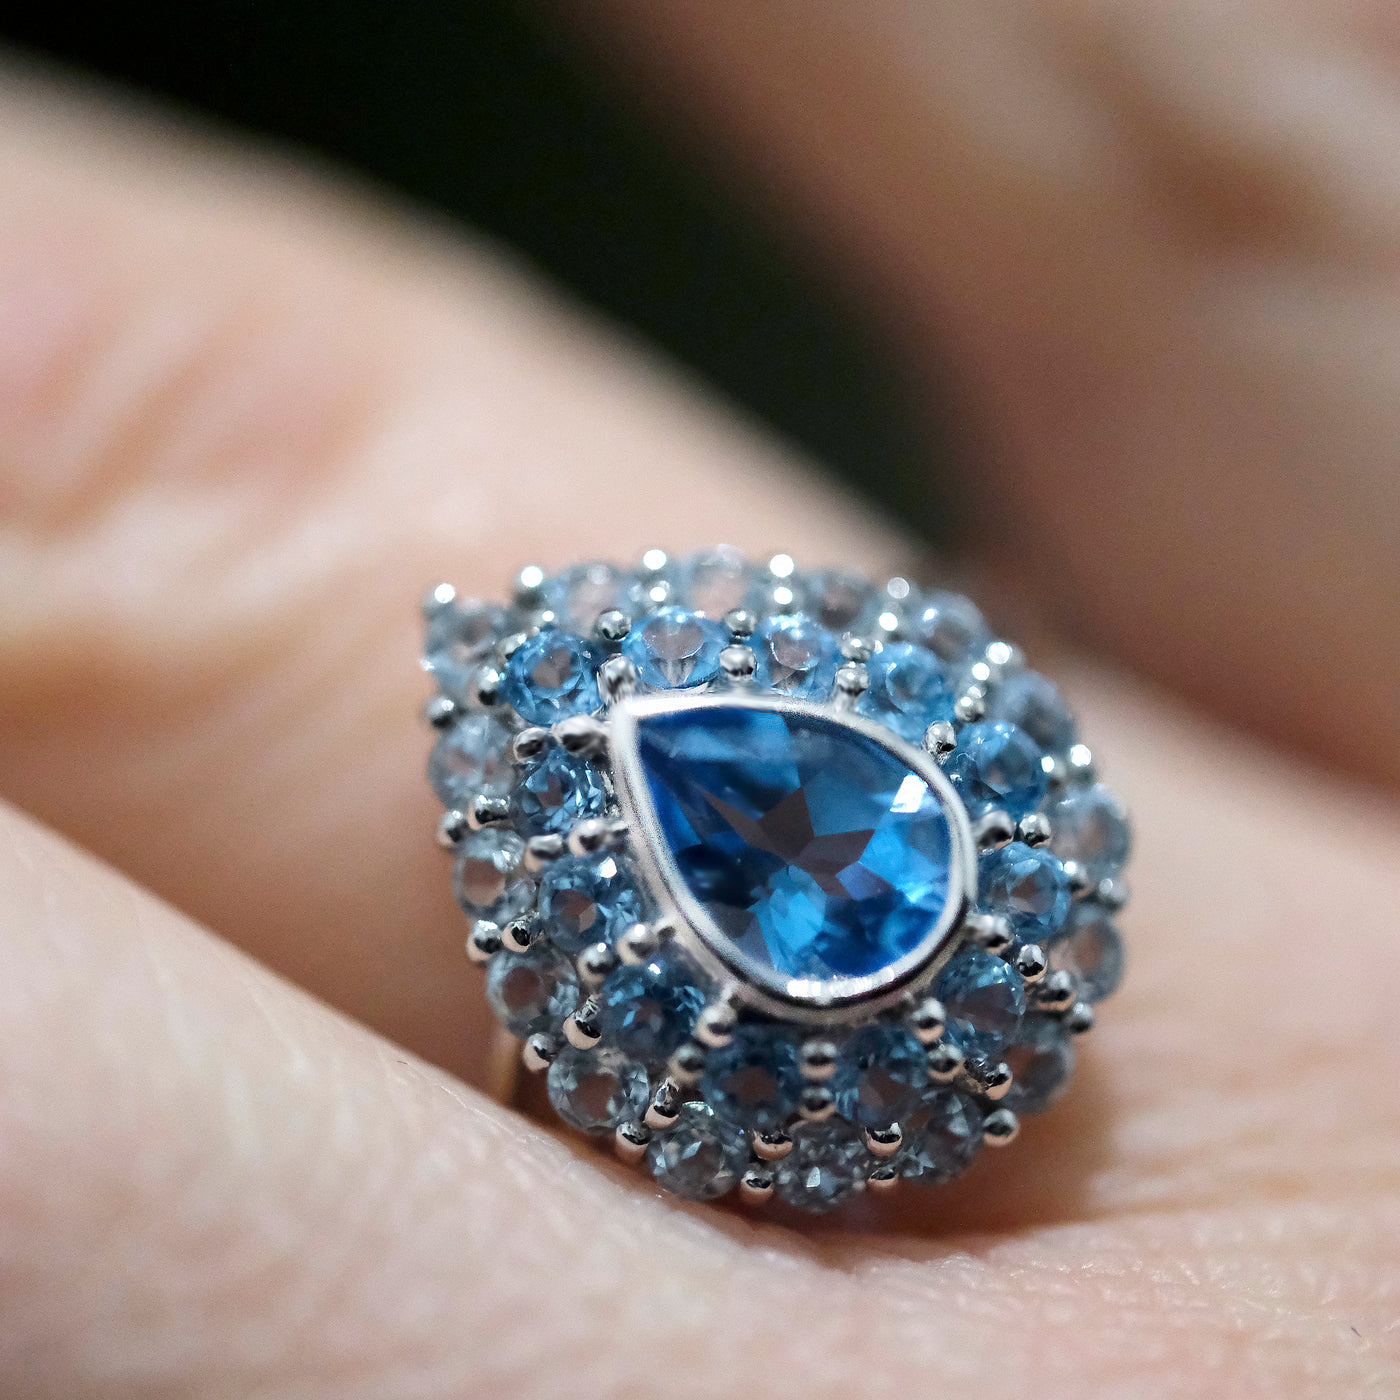 Shade of Blue Topaz Ring